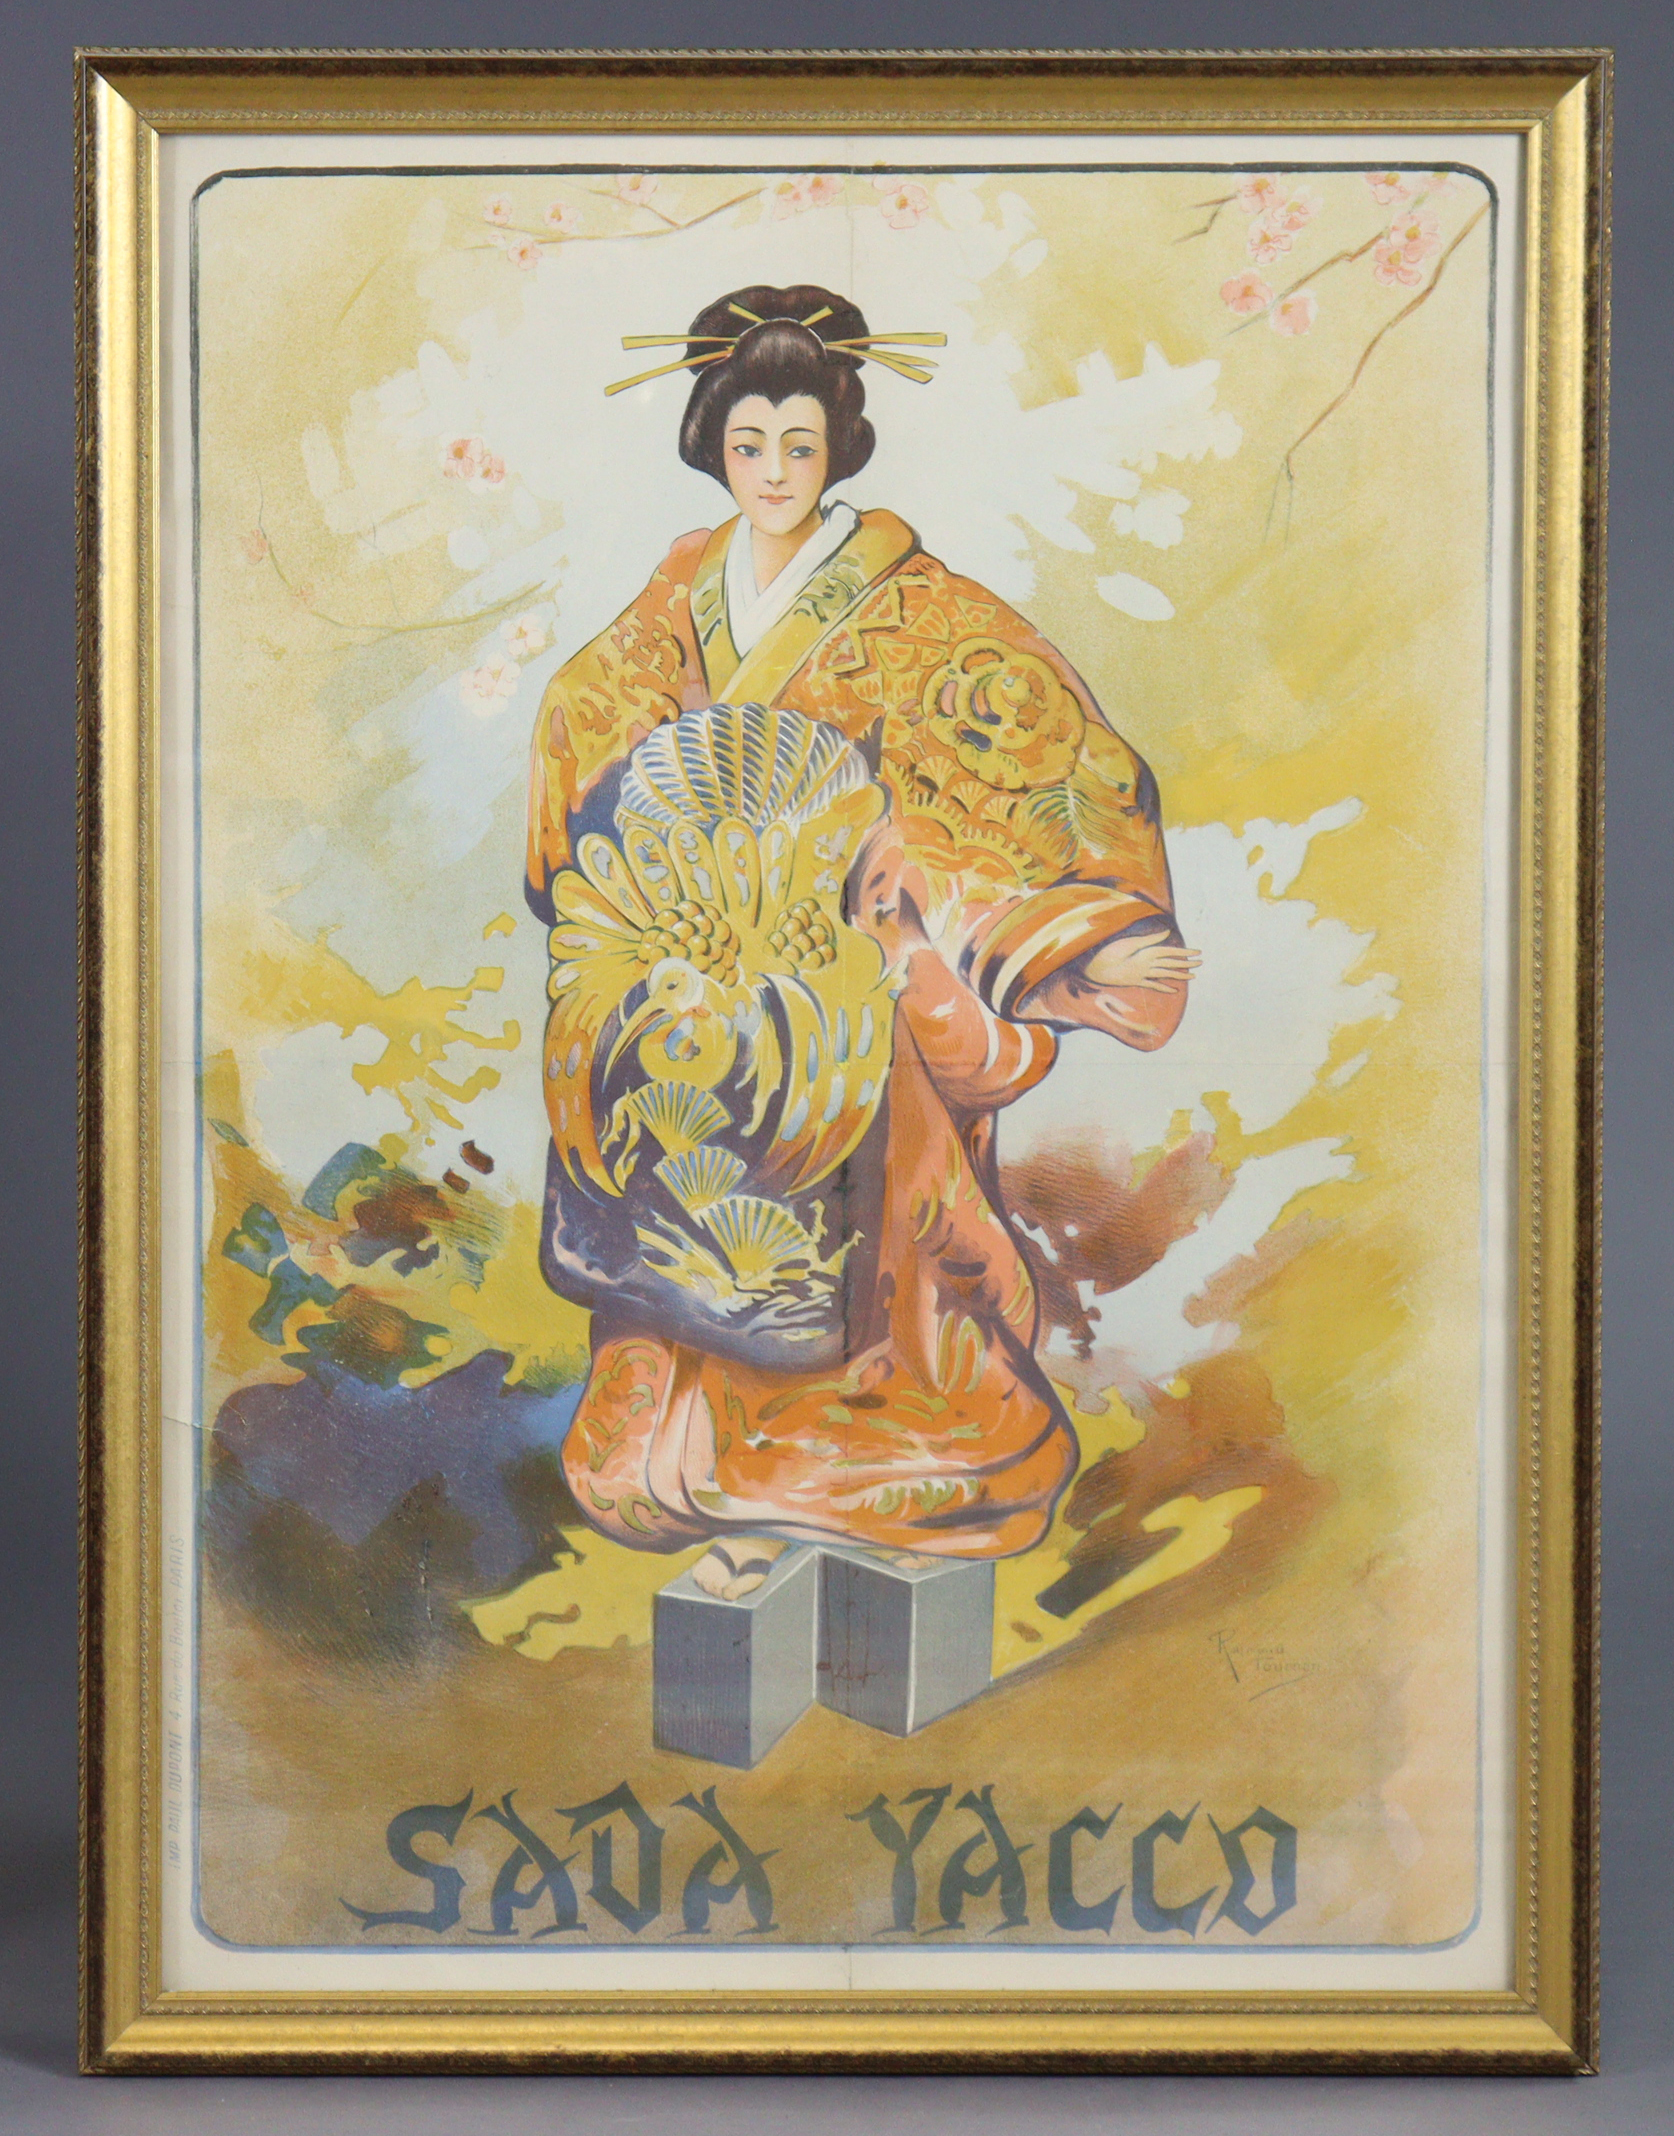 RAYMOND TOURNON (1870-1919). “Sada Yacco” coloured advertising poster for the Japanese actress & - Image 2 of 5